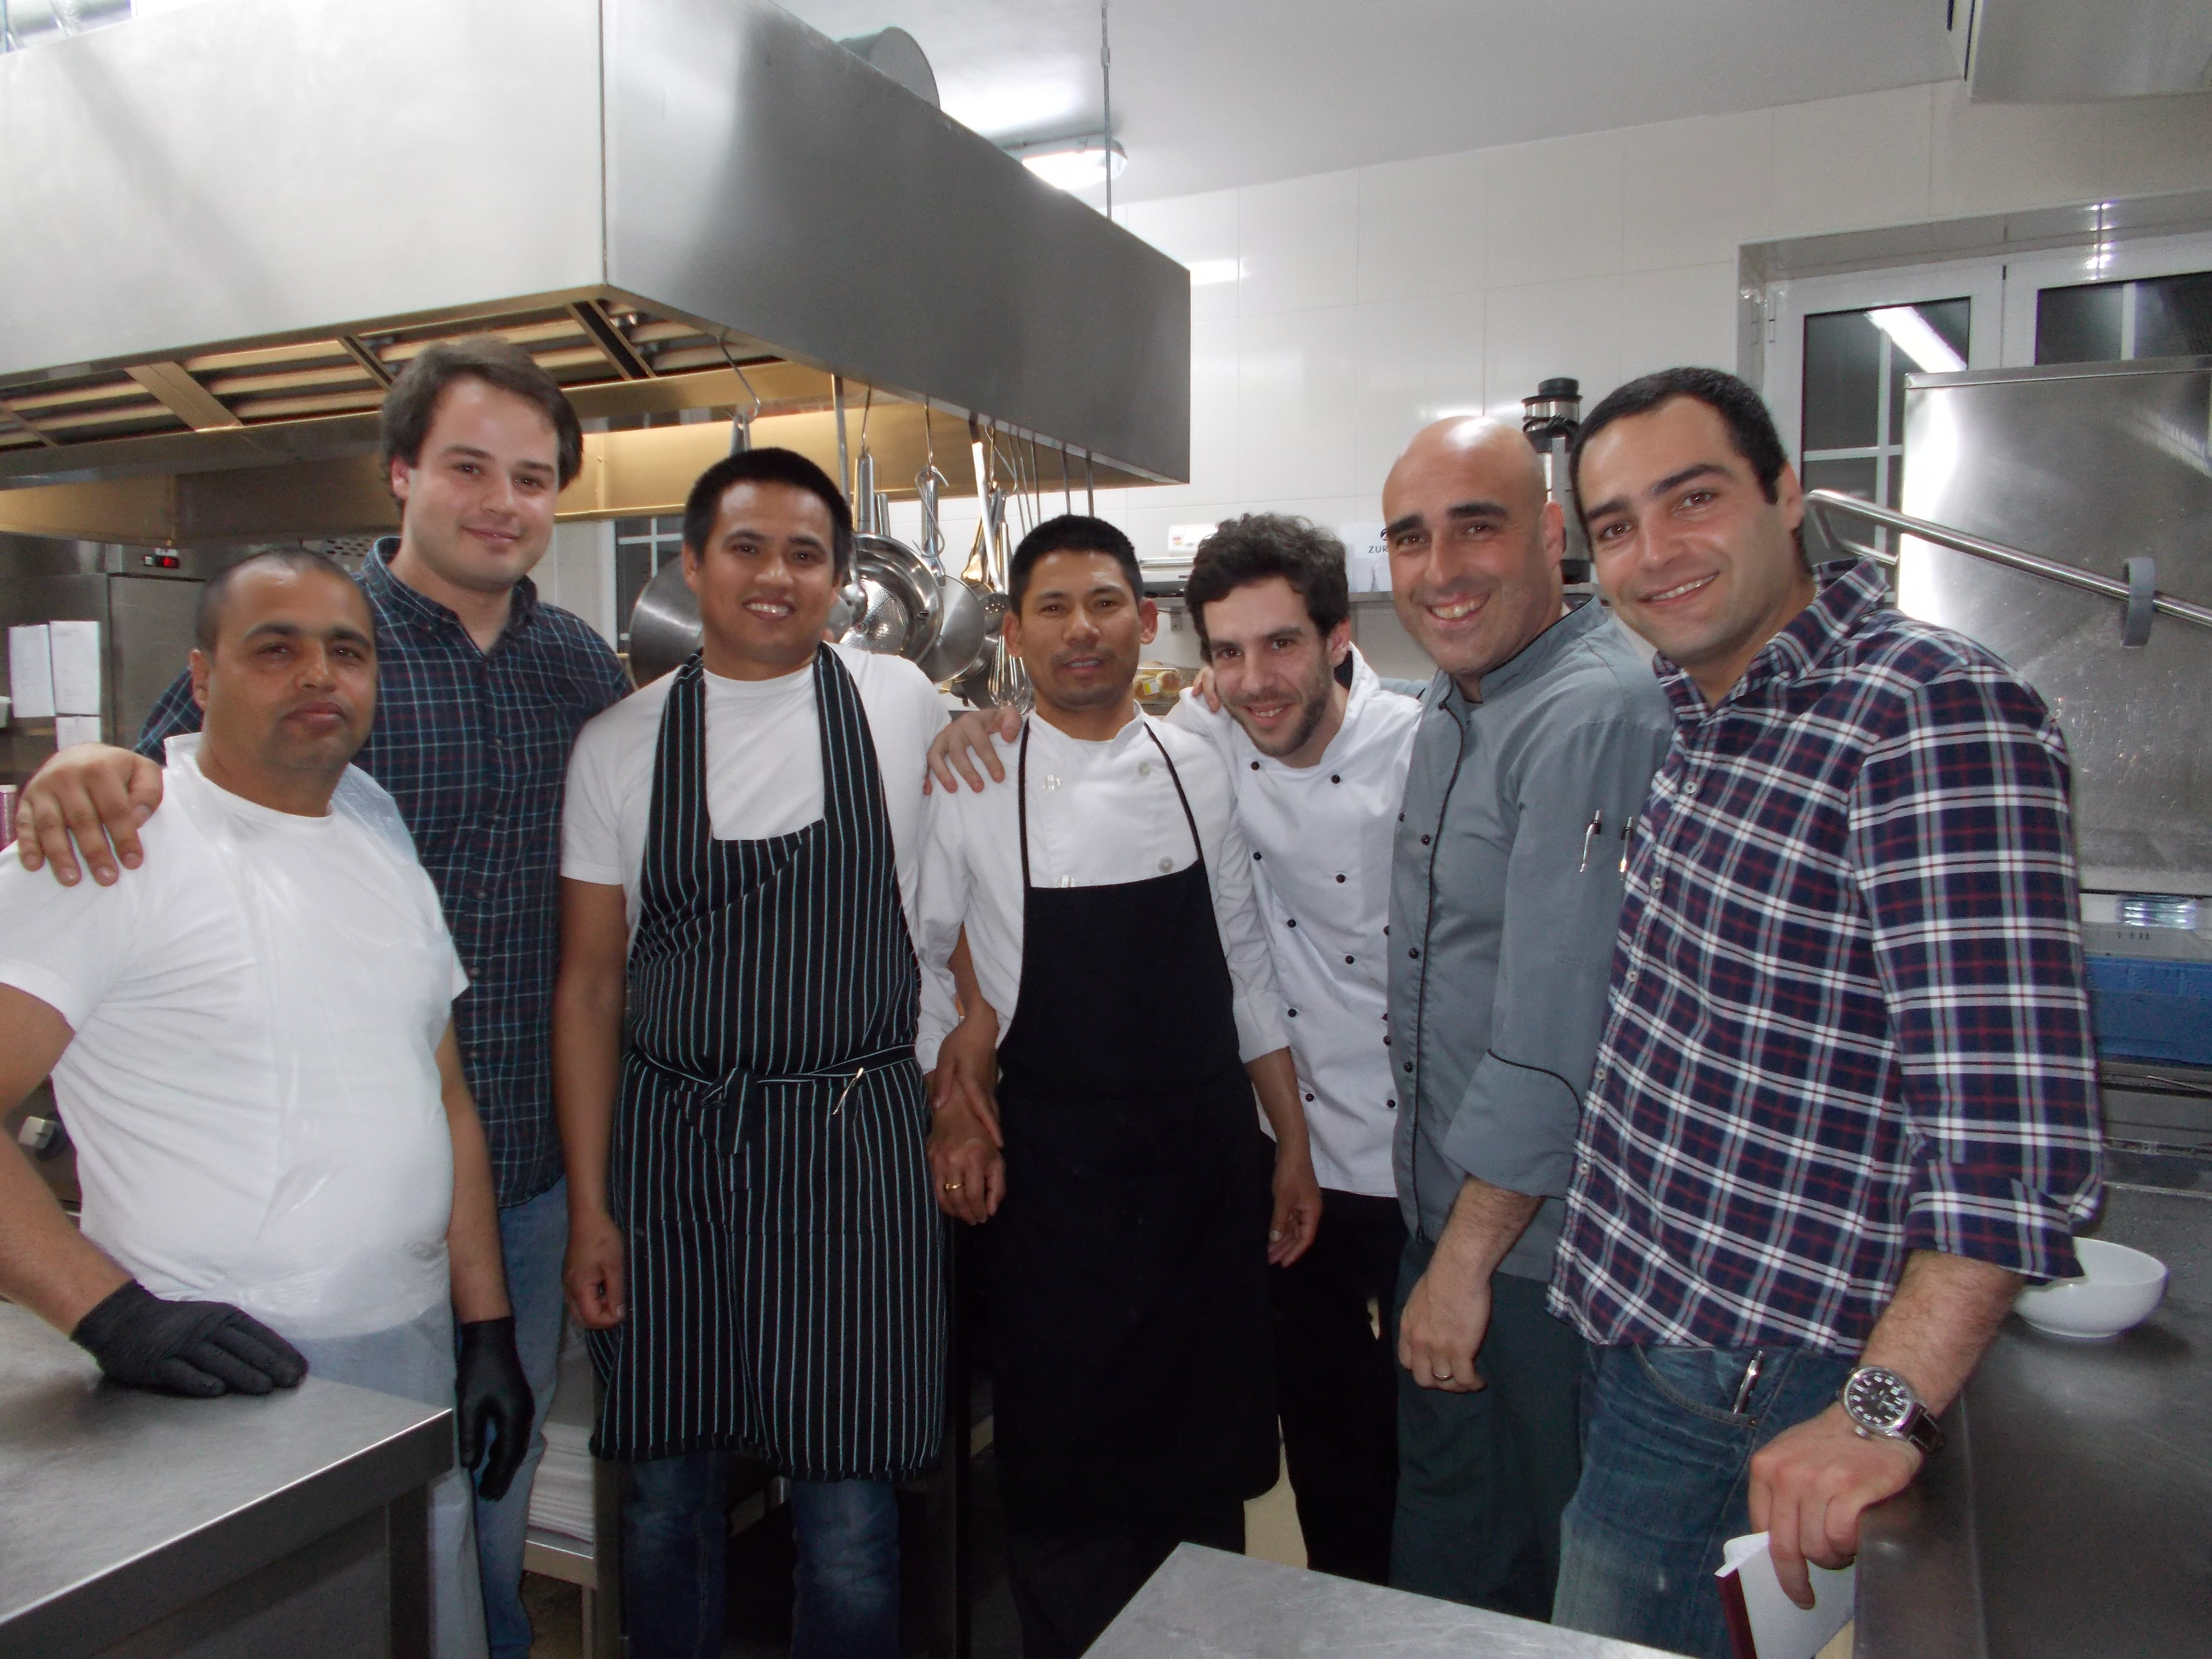 O Reserva Chef Pedro Santos, Manager Ricardo Frois, Server Carlos Sousa, Assistants to the Chef - Joao Ribeiro, Hamanta, Aovi, Surya